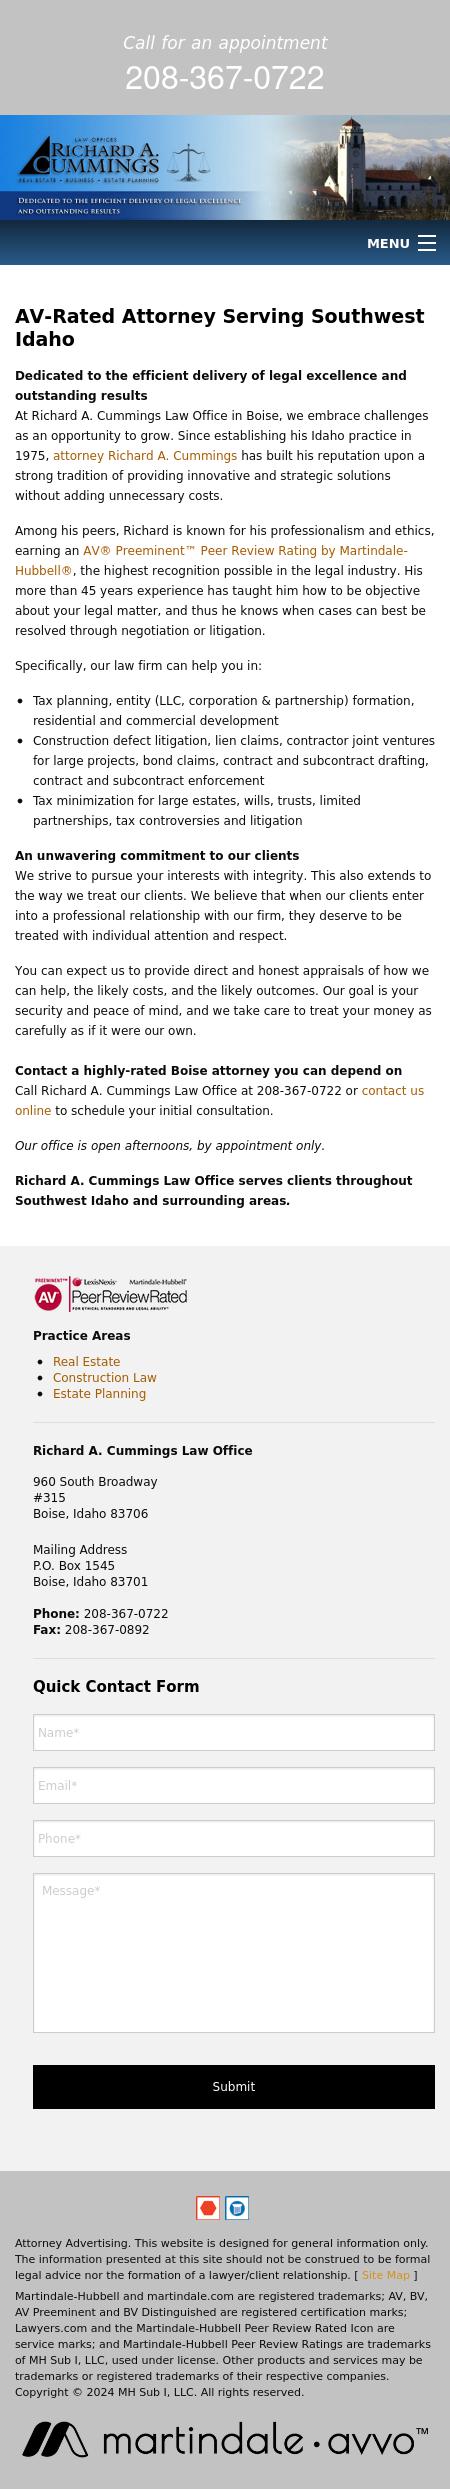 Givens Pursley LLP - Boise ID Lawyers